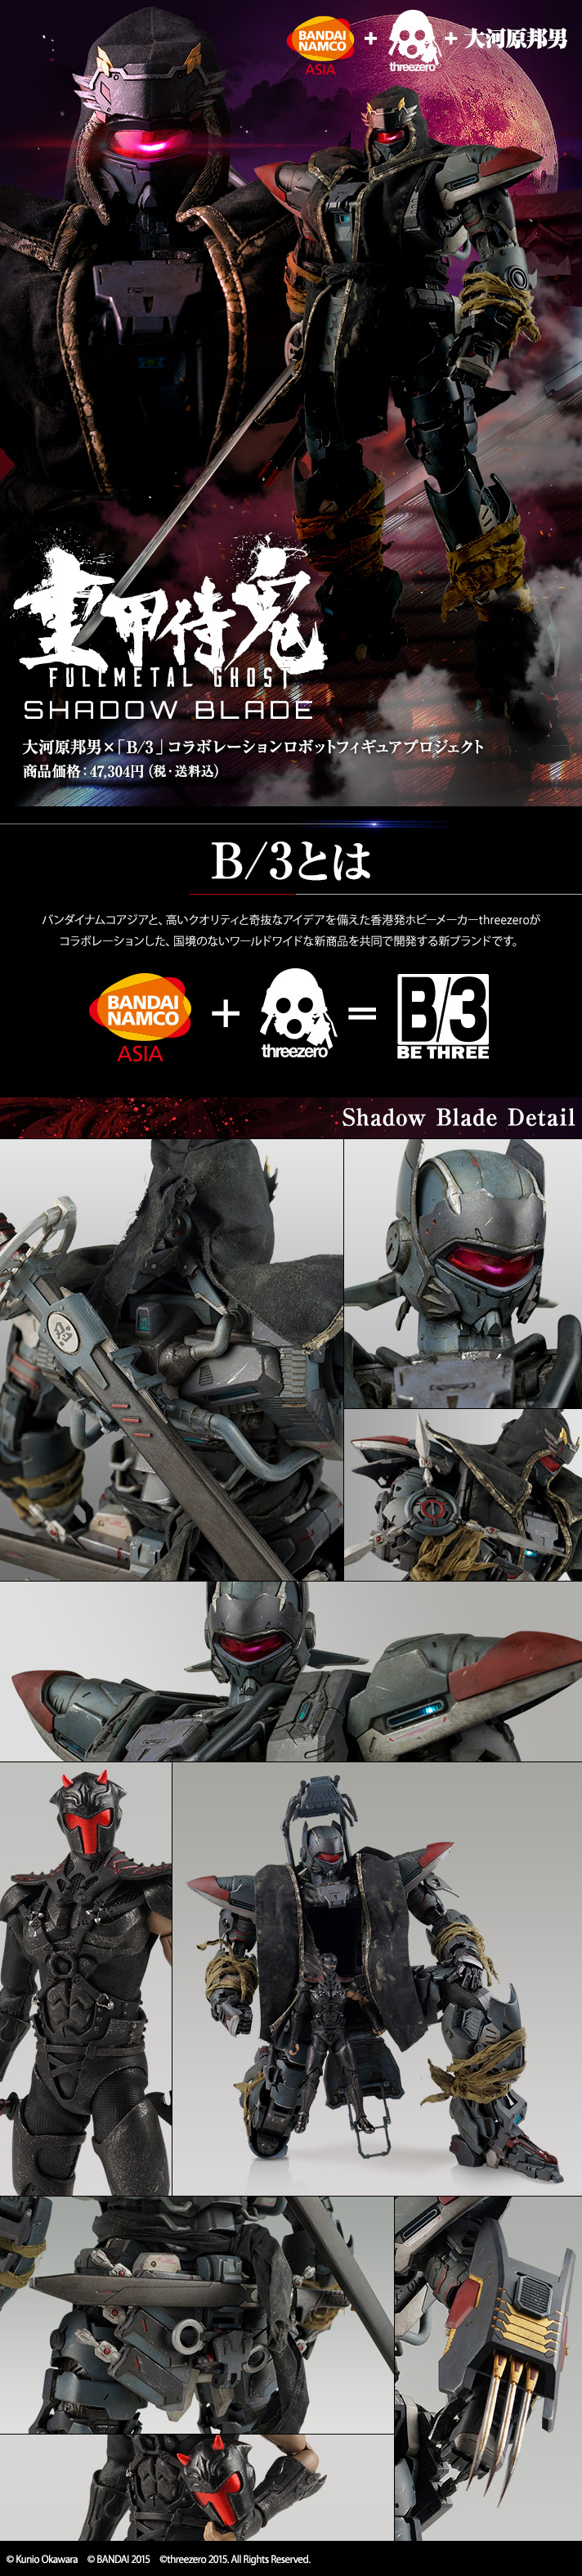 B 3 重甲侍鬼 フルメタルゴースト 1 12 Shadow Blade 趣味 コレクション バンダイナムコグループ公式通販サイト